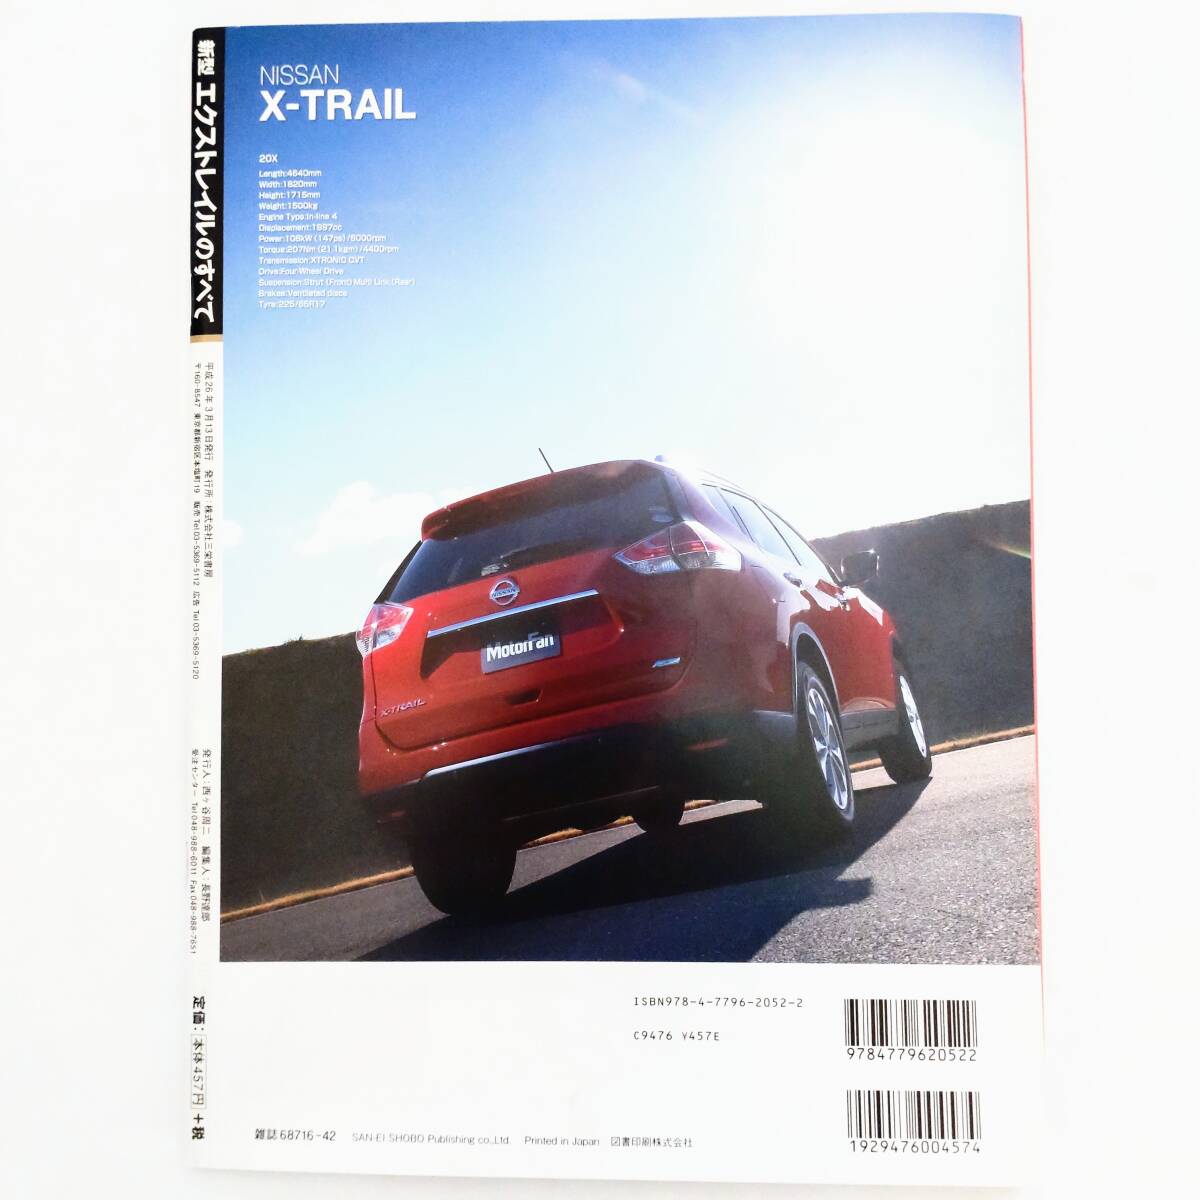  X-trail. all Motor Fan separate volume new model news flash no. 491. Nissan Heisei era 26 year issue three . bookstore T32 NT32 X-TRAIL 20X